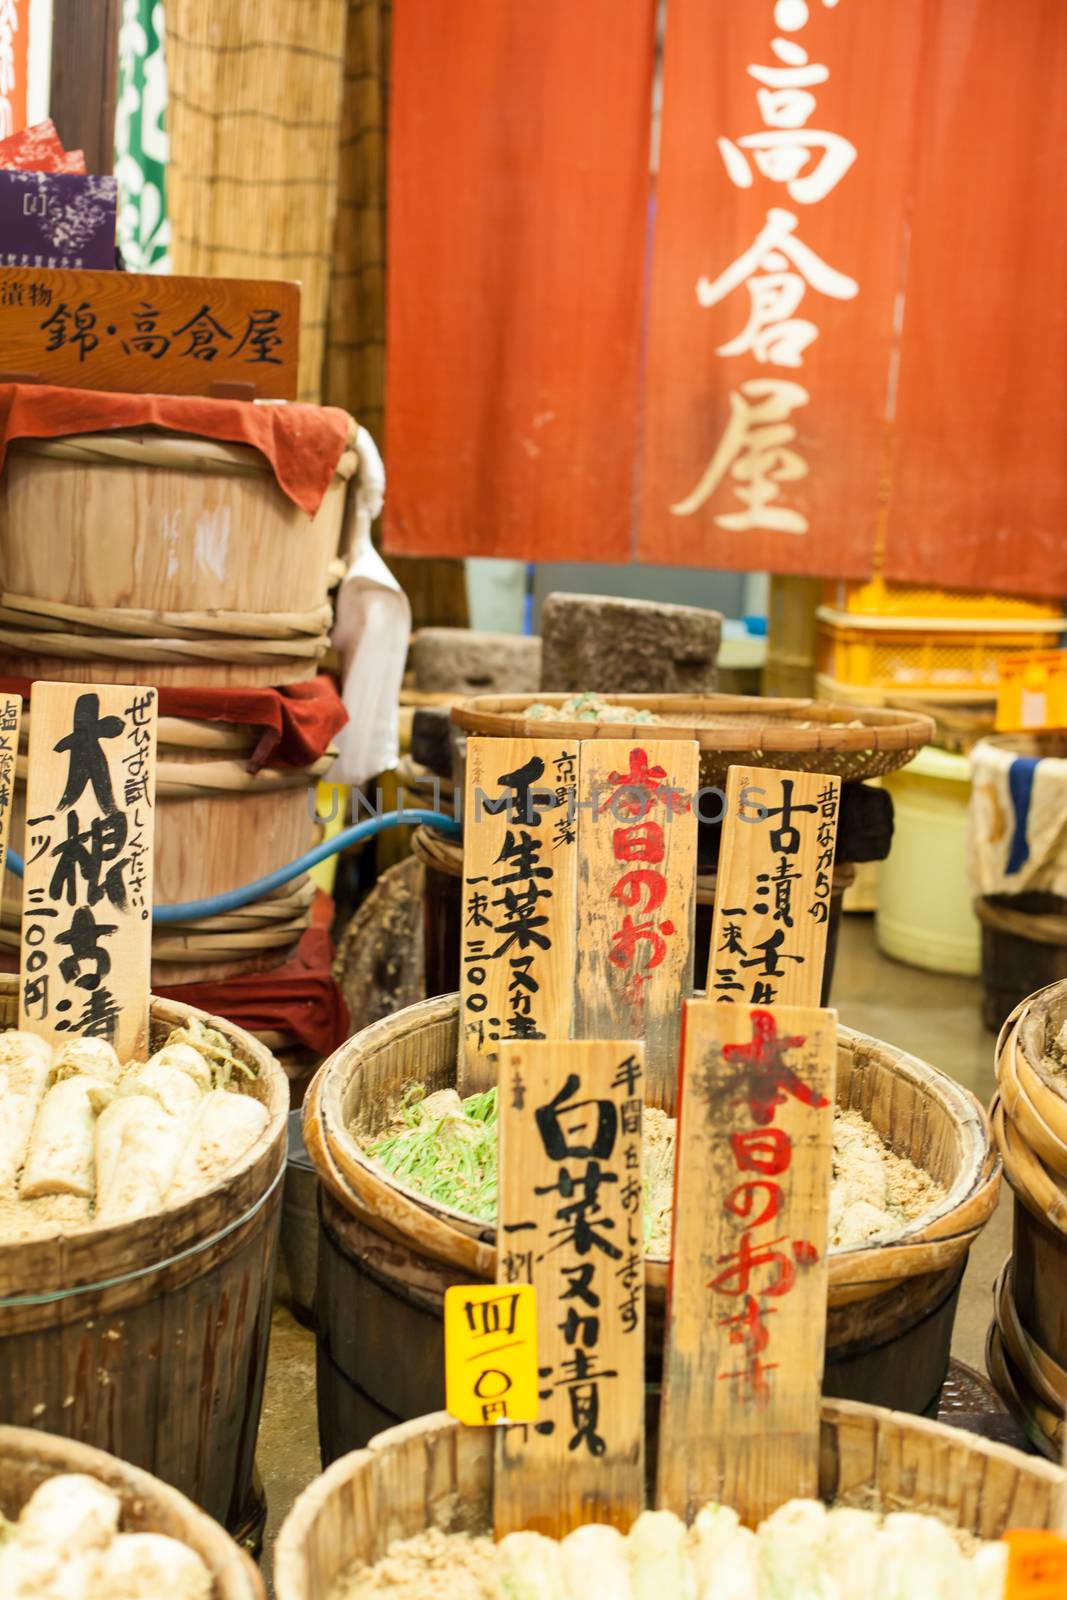 Traditional market in Japan. by mariusz_prusaczyk